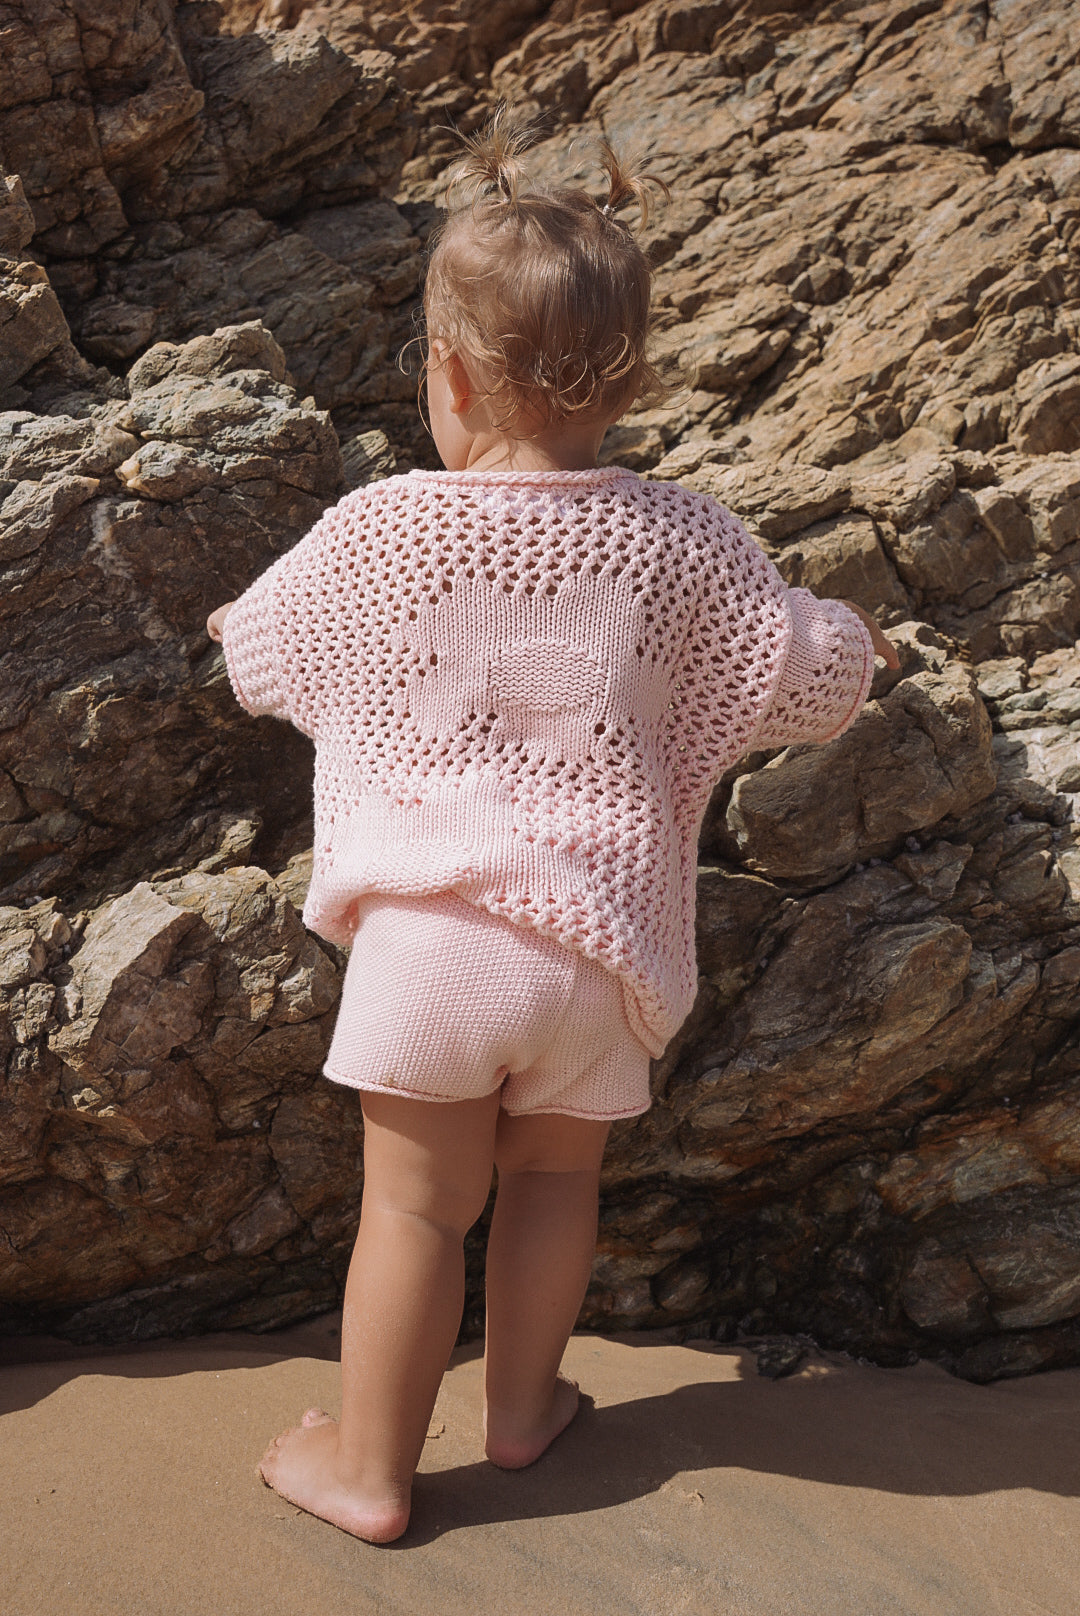 Crochet Shorts | Cherry Blossom